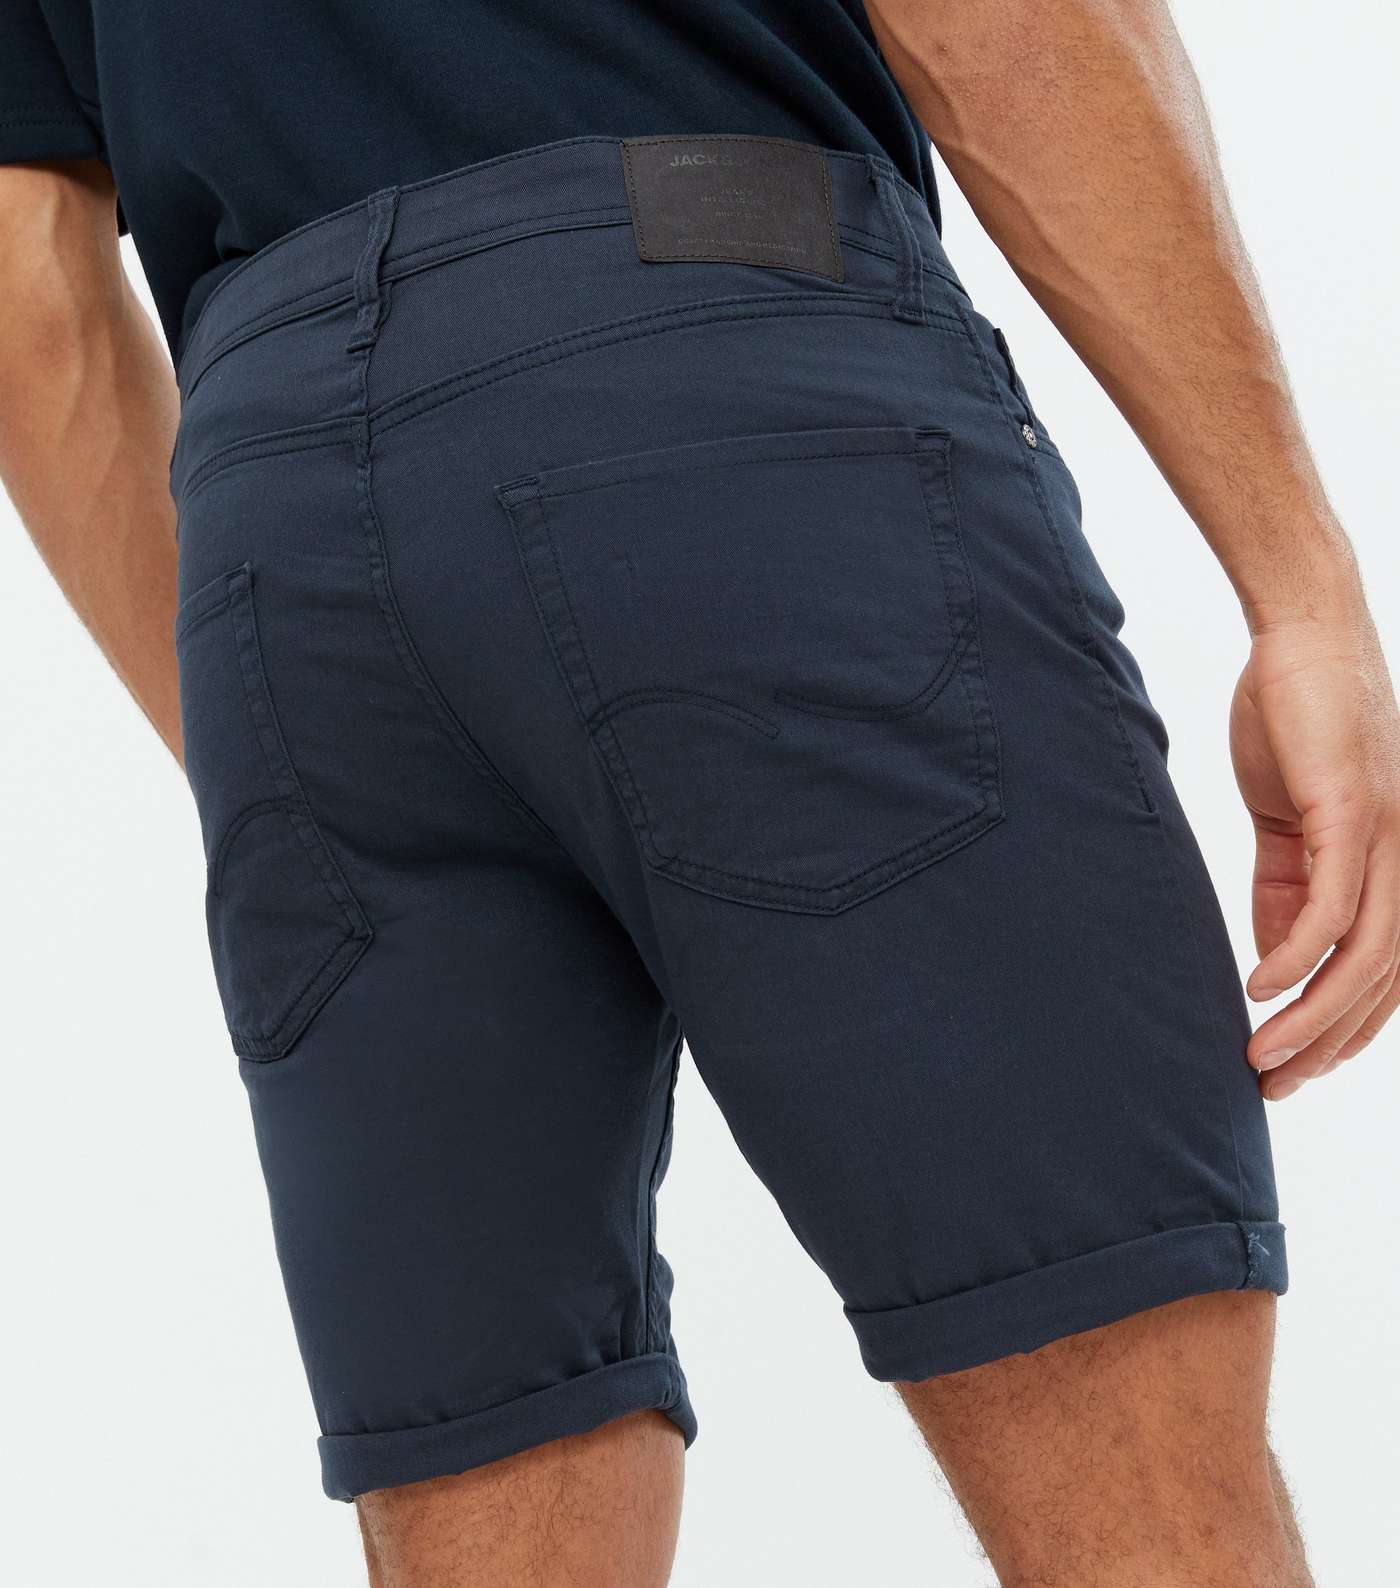 Jack & Jones Navy Denim Slim Fit Shorts Image 3